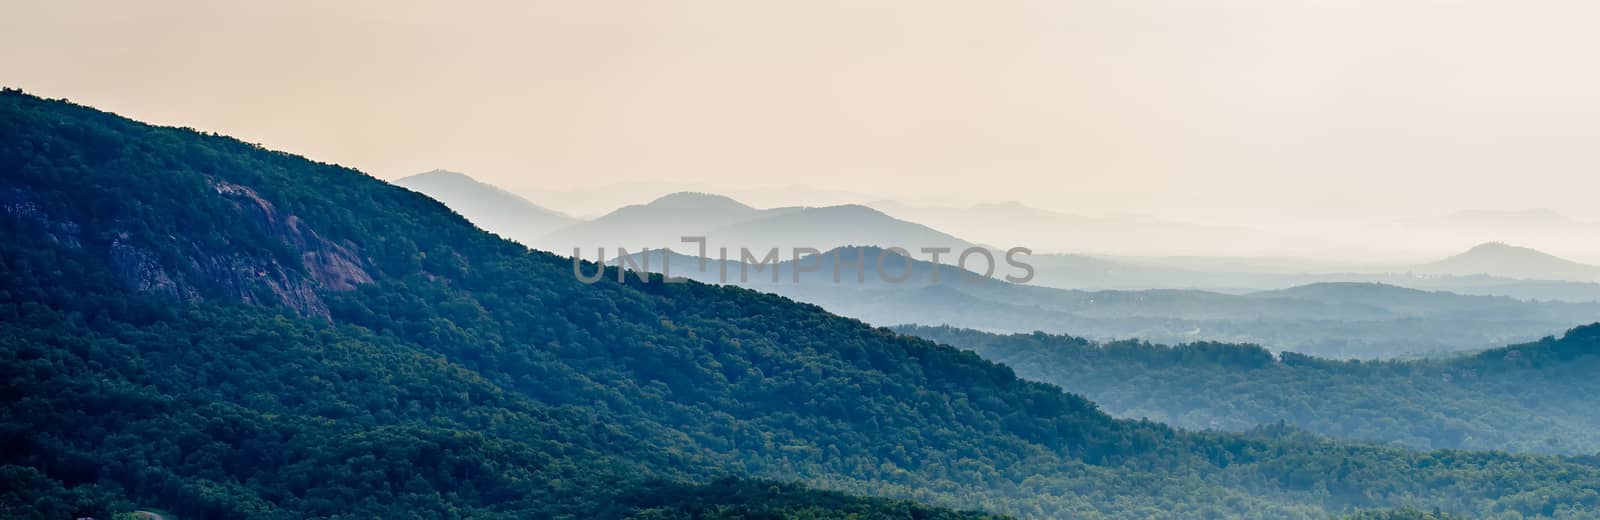 scenes near chimney rock and lake lure in blue ridge mountains north carolina